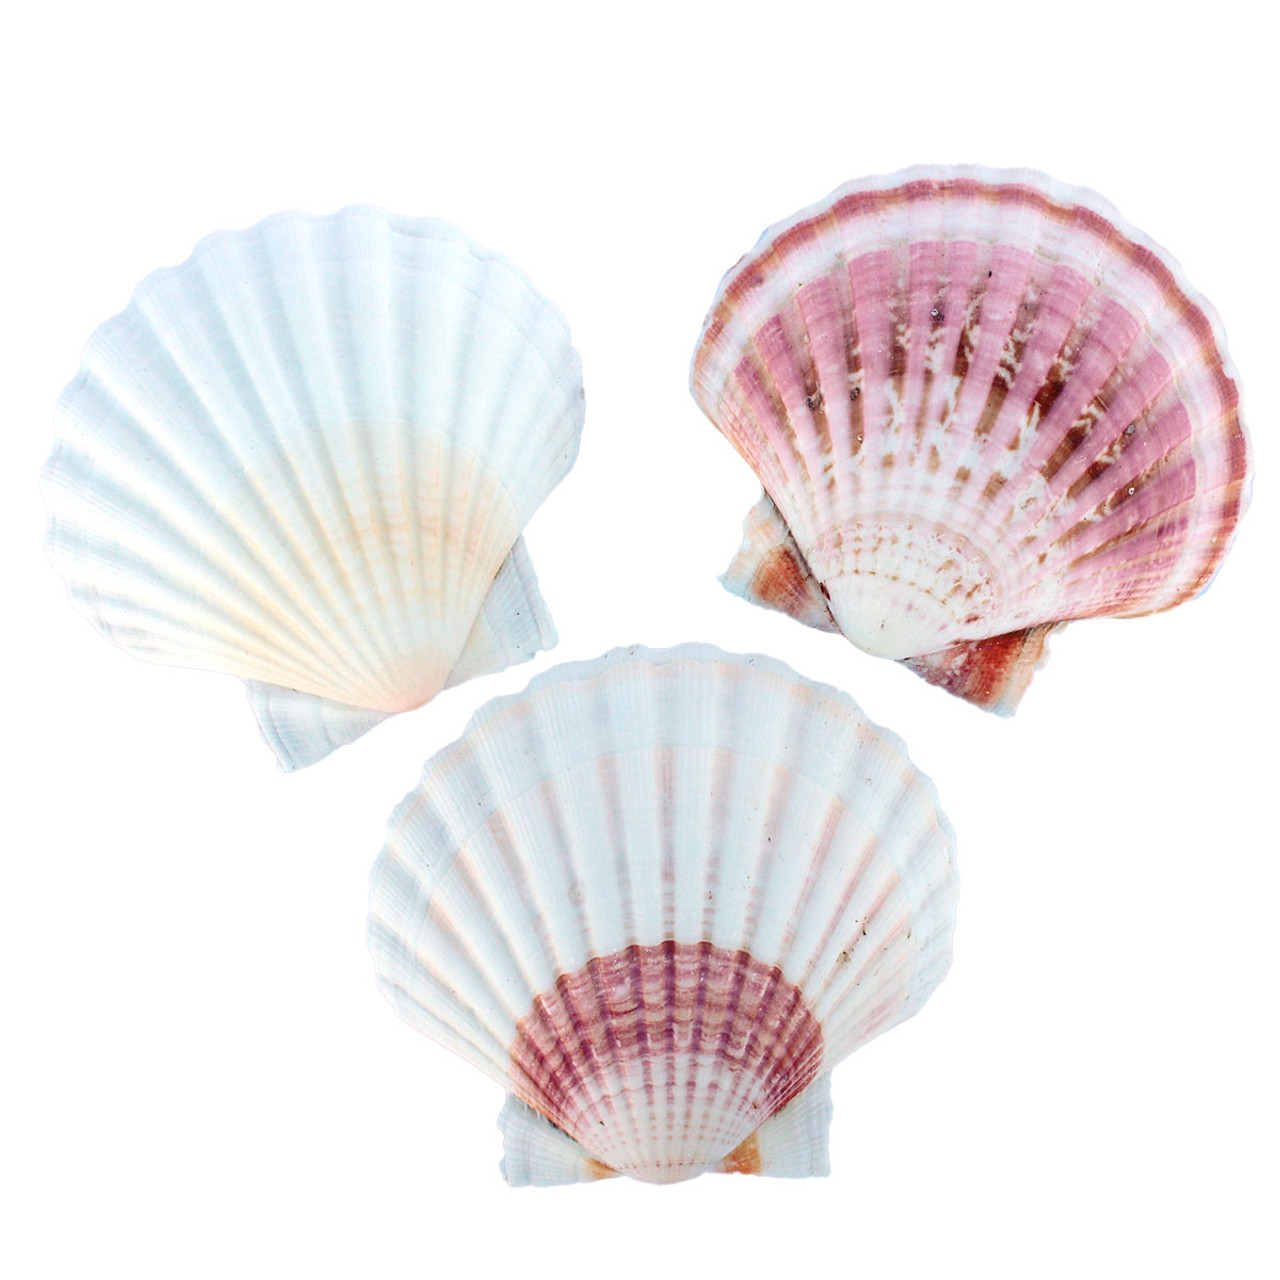 Colorful White Irish Scallop Seashells - Pectin Shells - Beach Wedding Decor